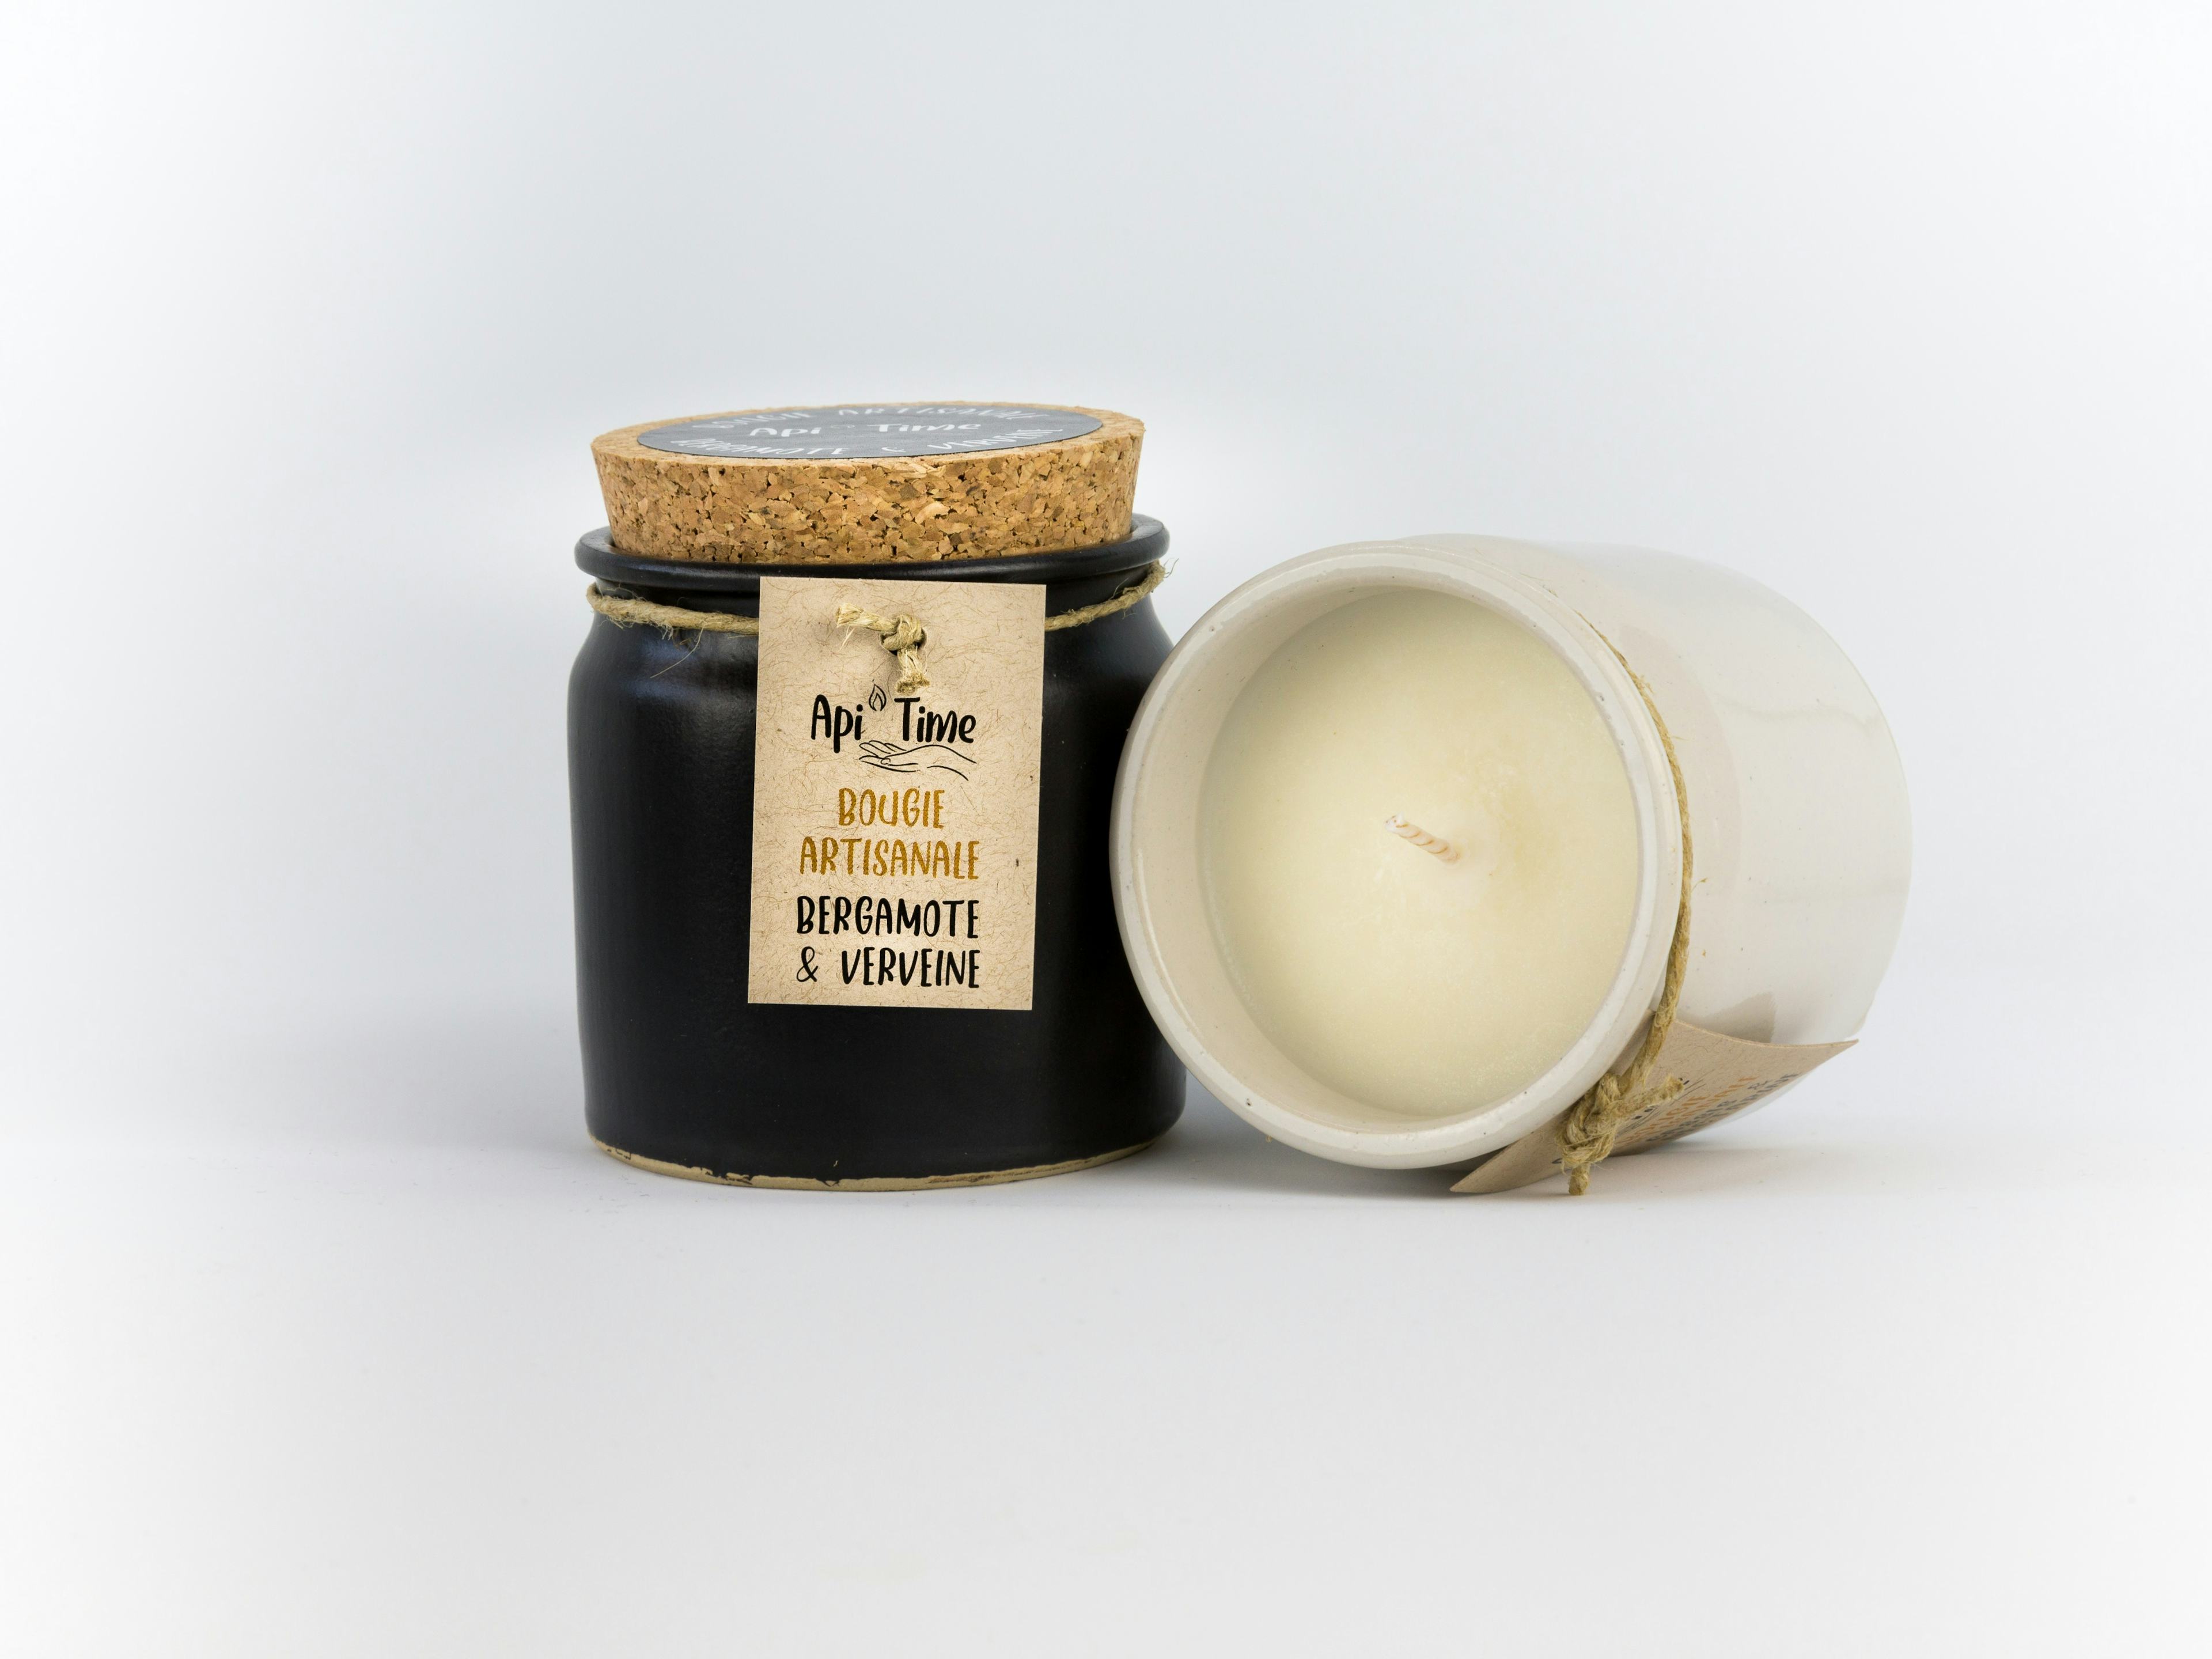 Candles in ceramic pot, Bergamot & Verbena scent, Le Goût du Miel, Courtepin, image 1 | Mimelis